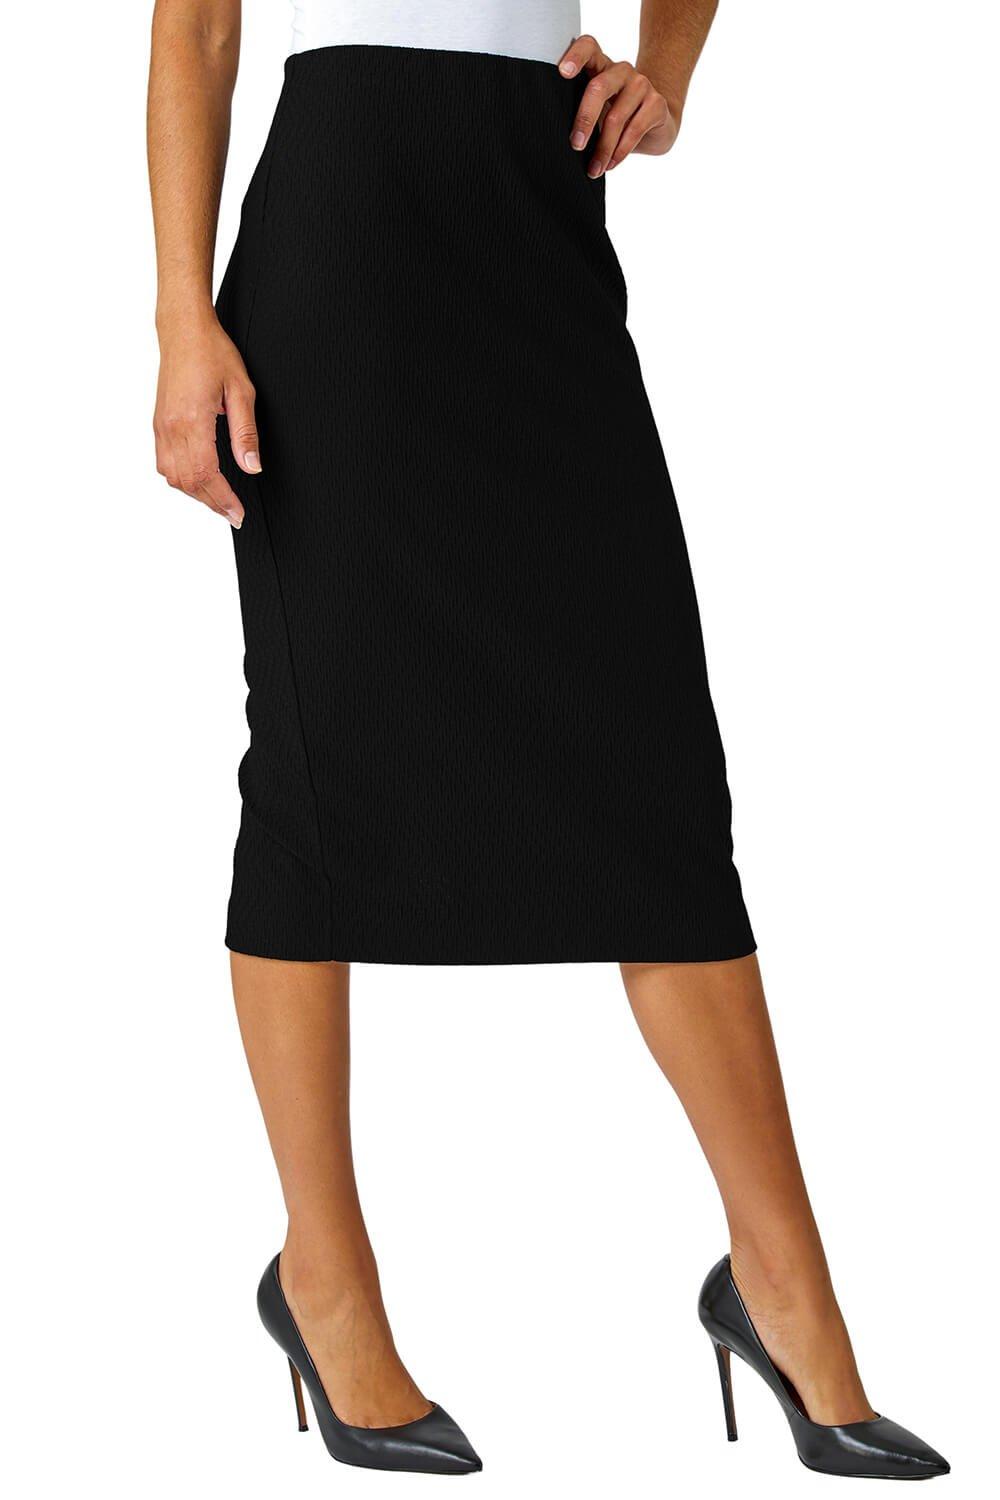 Roman Women's Stretch Jersey Textured Pencil Skirt|Size: 10|black